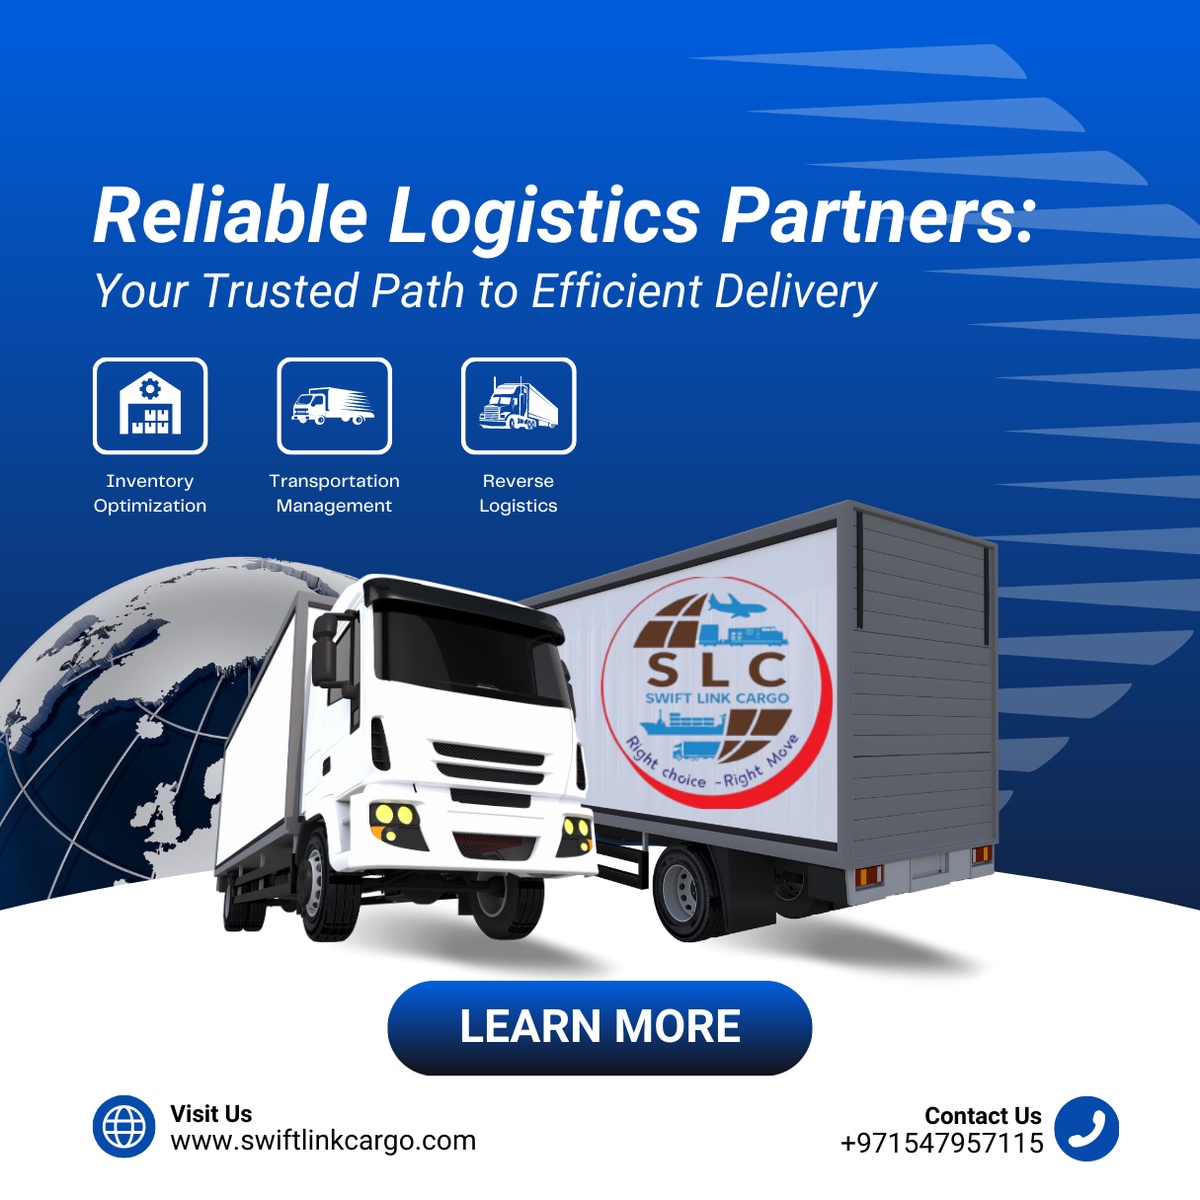 Dubai's Top Logistics and Shipping Services